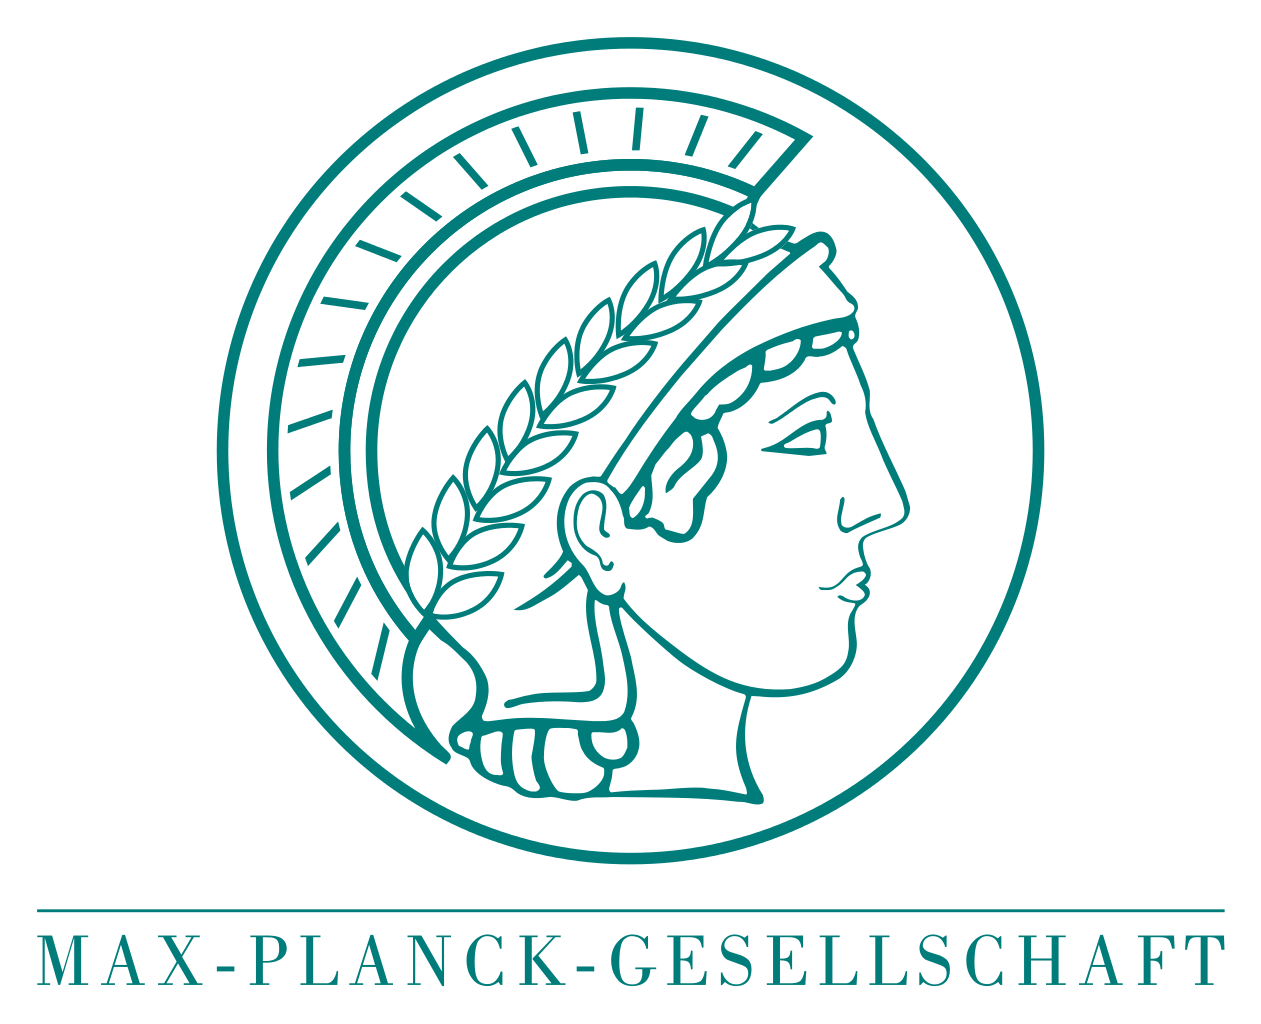 Max Planck Society logo is presented